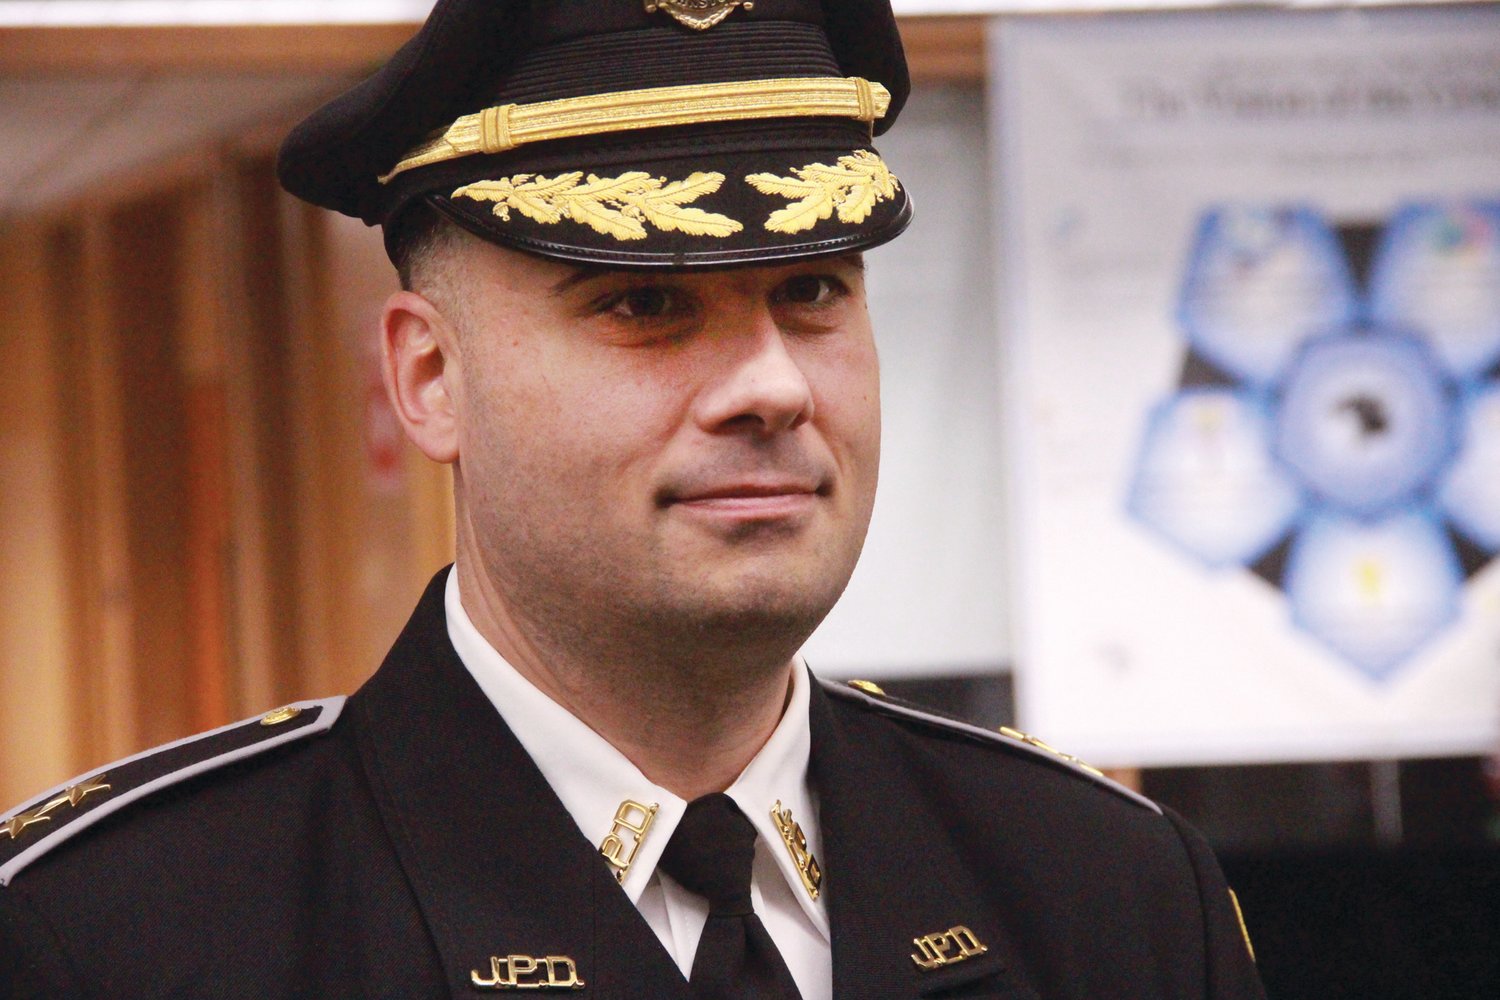 DEPUTY CHIEF PROMOTED: Former Johnston Police Deputy Chief Mark A. Vieira was promoted to Police Chief Monday night.